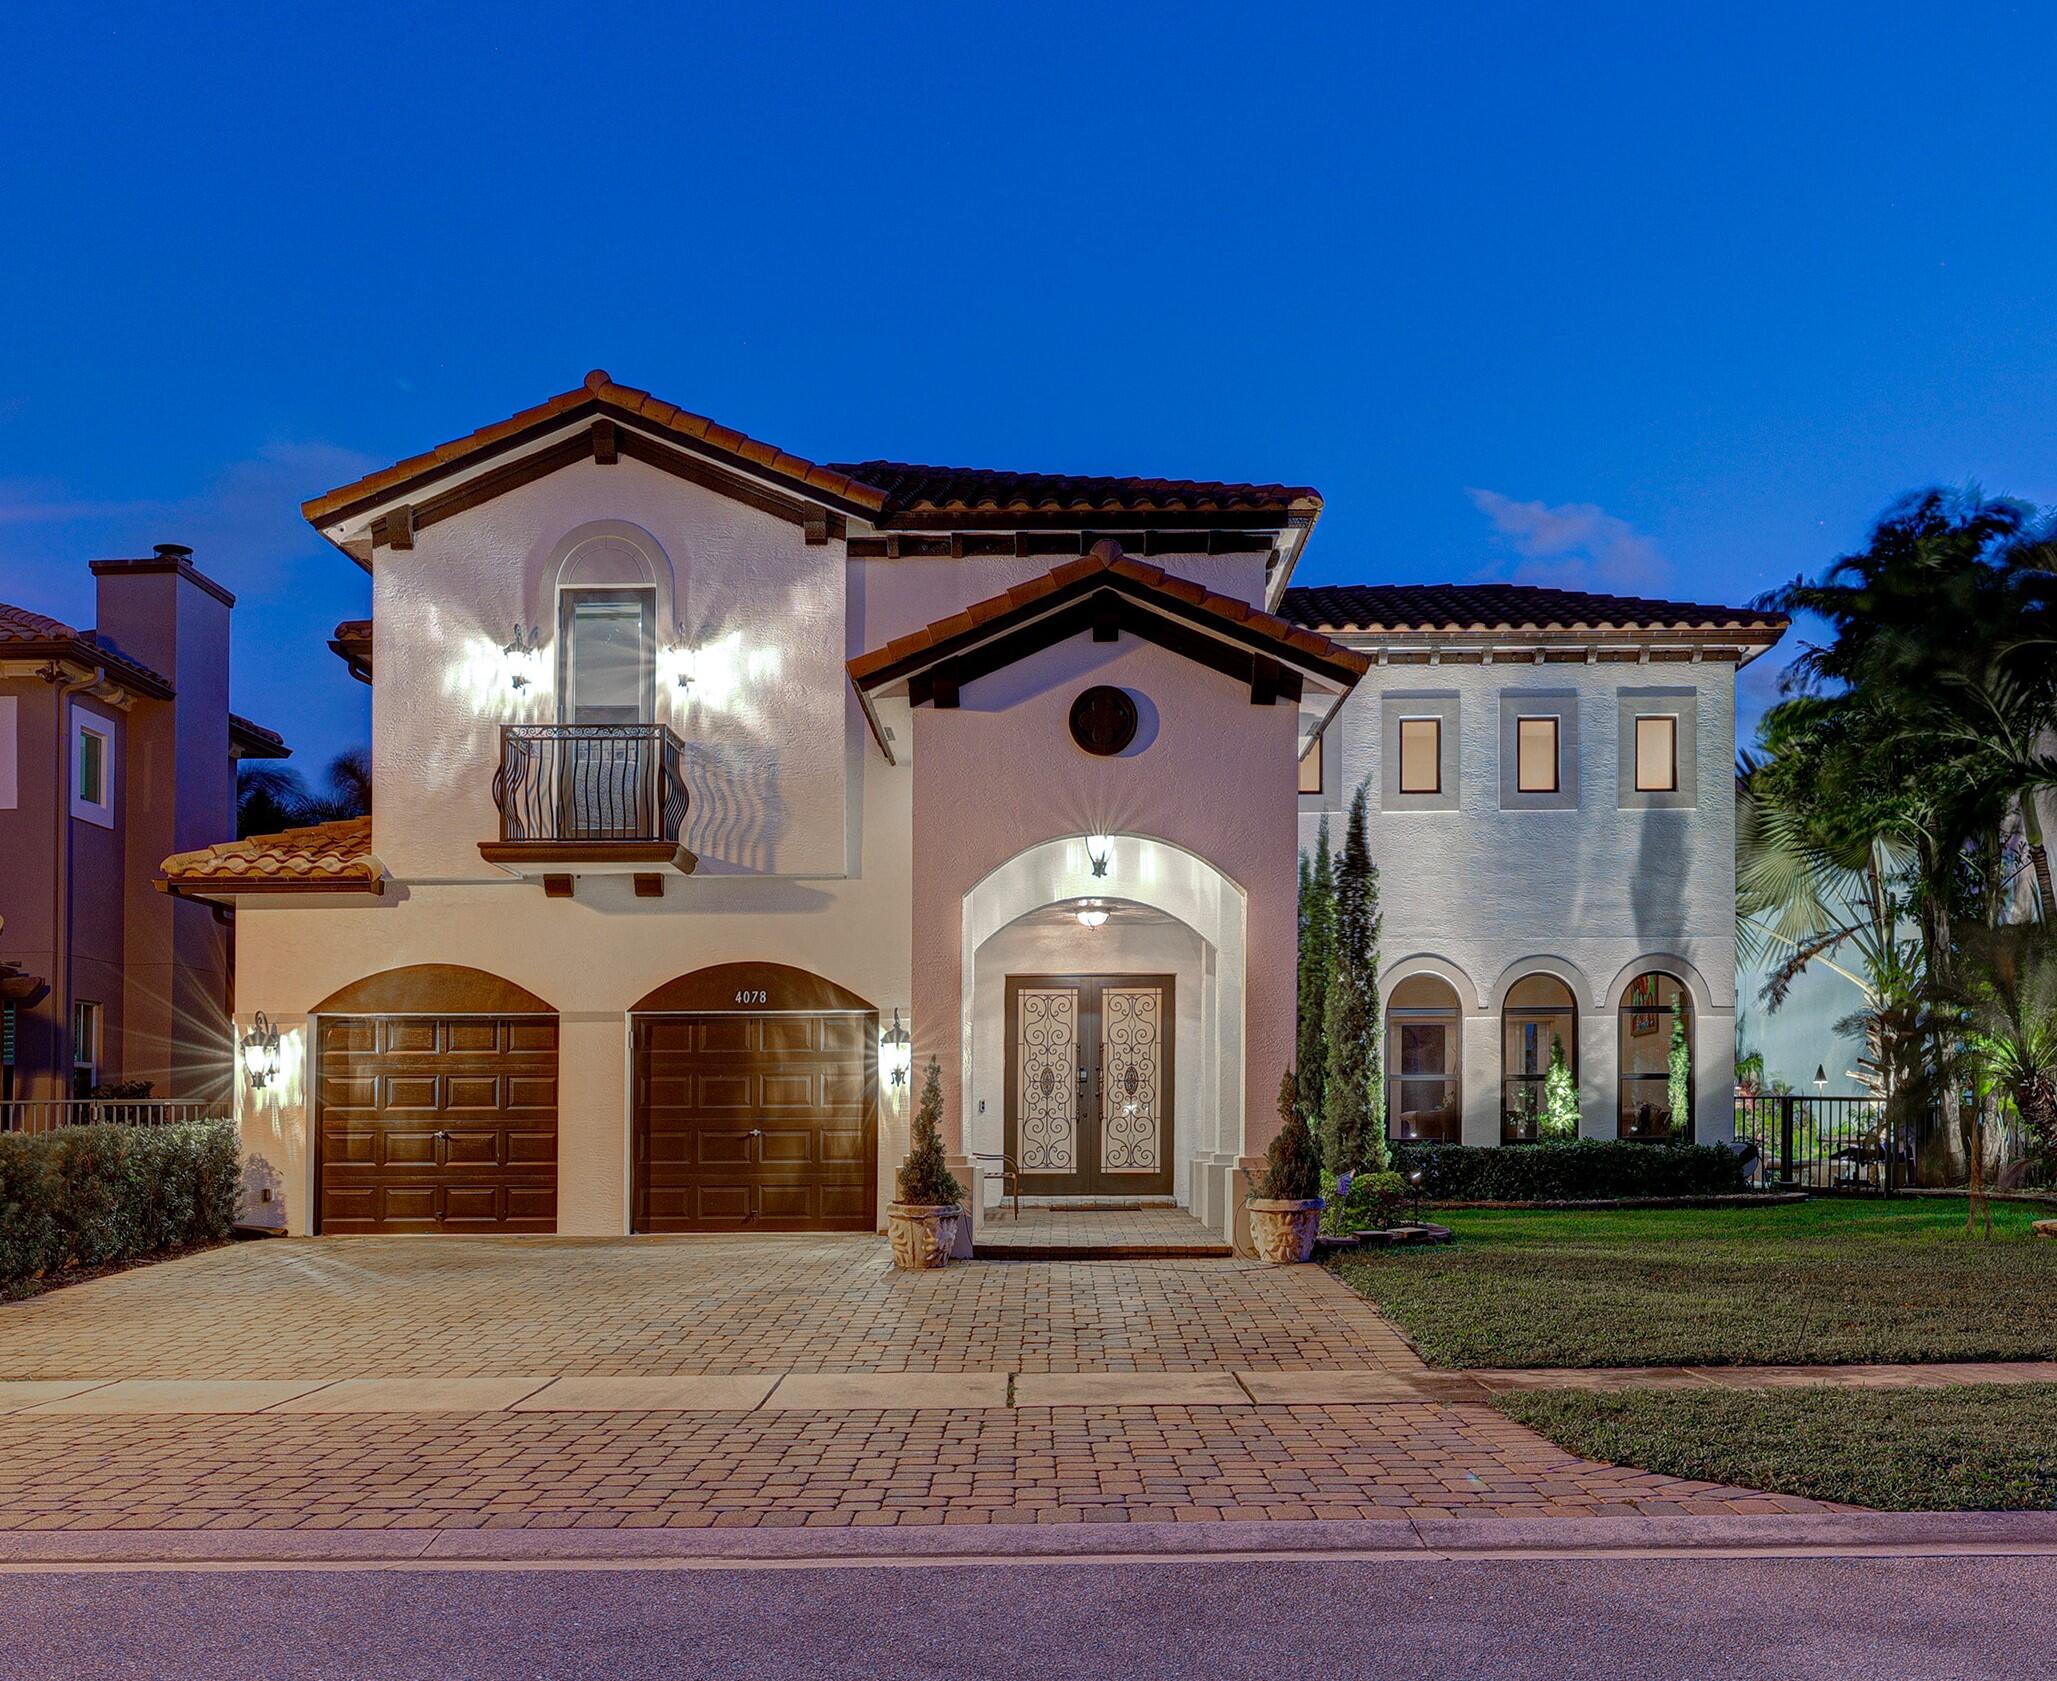 Property for Sale at 4078 Artesa Drive, Boynton Beach, Palm Beach County, Florida - Bedrooms: 4 
Bathrooms: 4  - $1,049,000